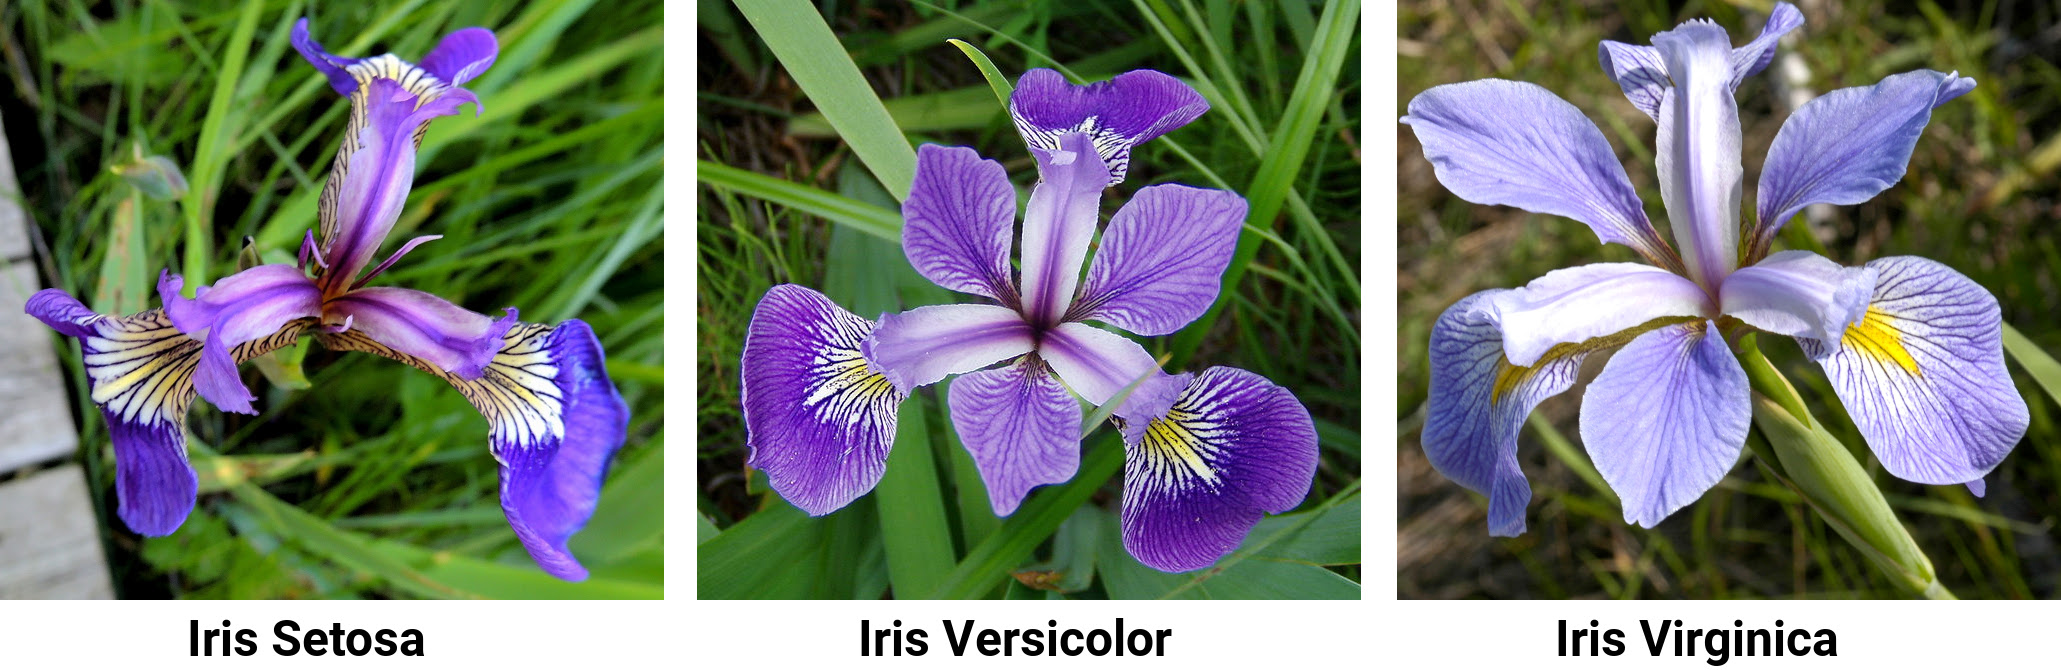 _images/iris_flowers.jpg